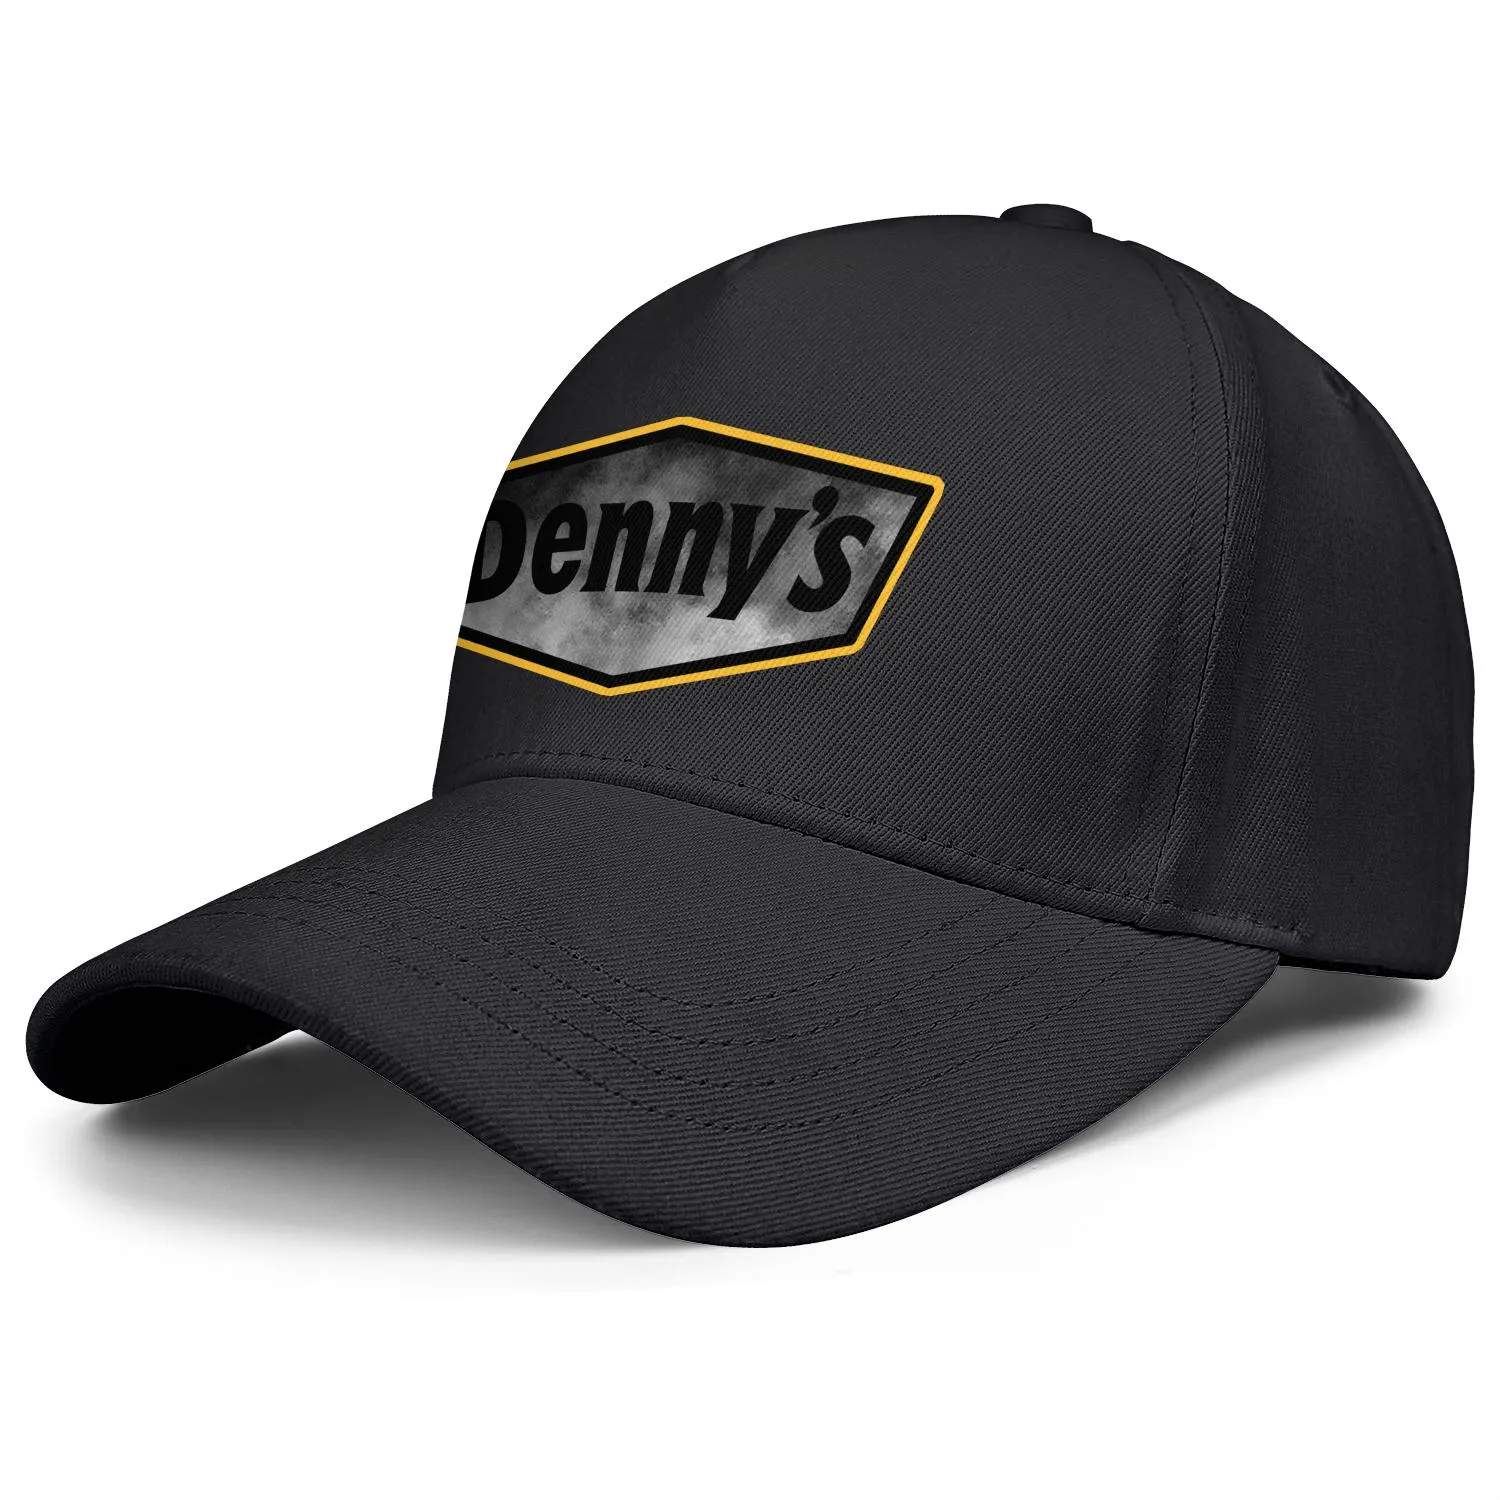 Dennys pancake huizen logo heren en dames verstelbare vrachtwagenchauffeur cap golf cool custom honkbalhats gouden kern rook Amerika fla1286705